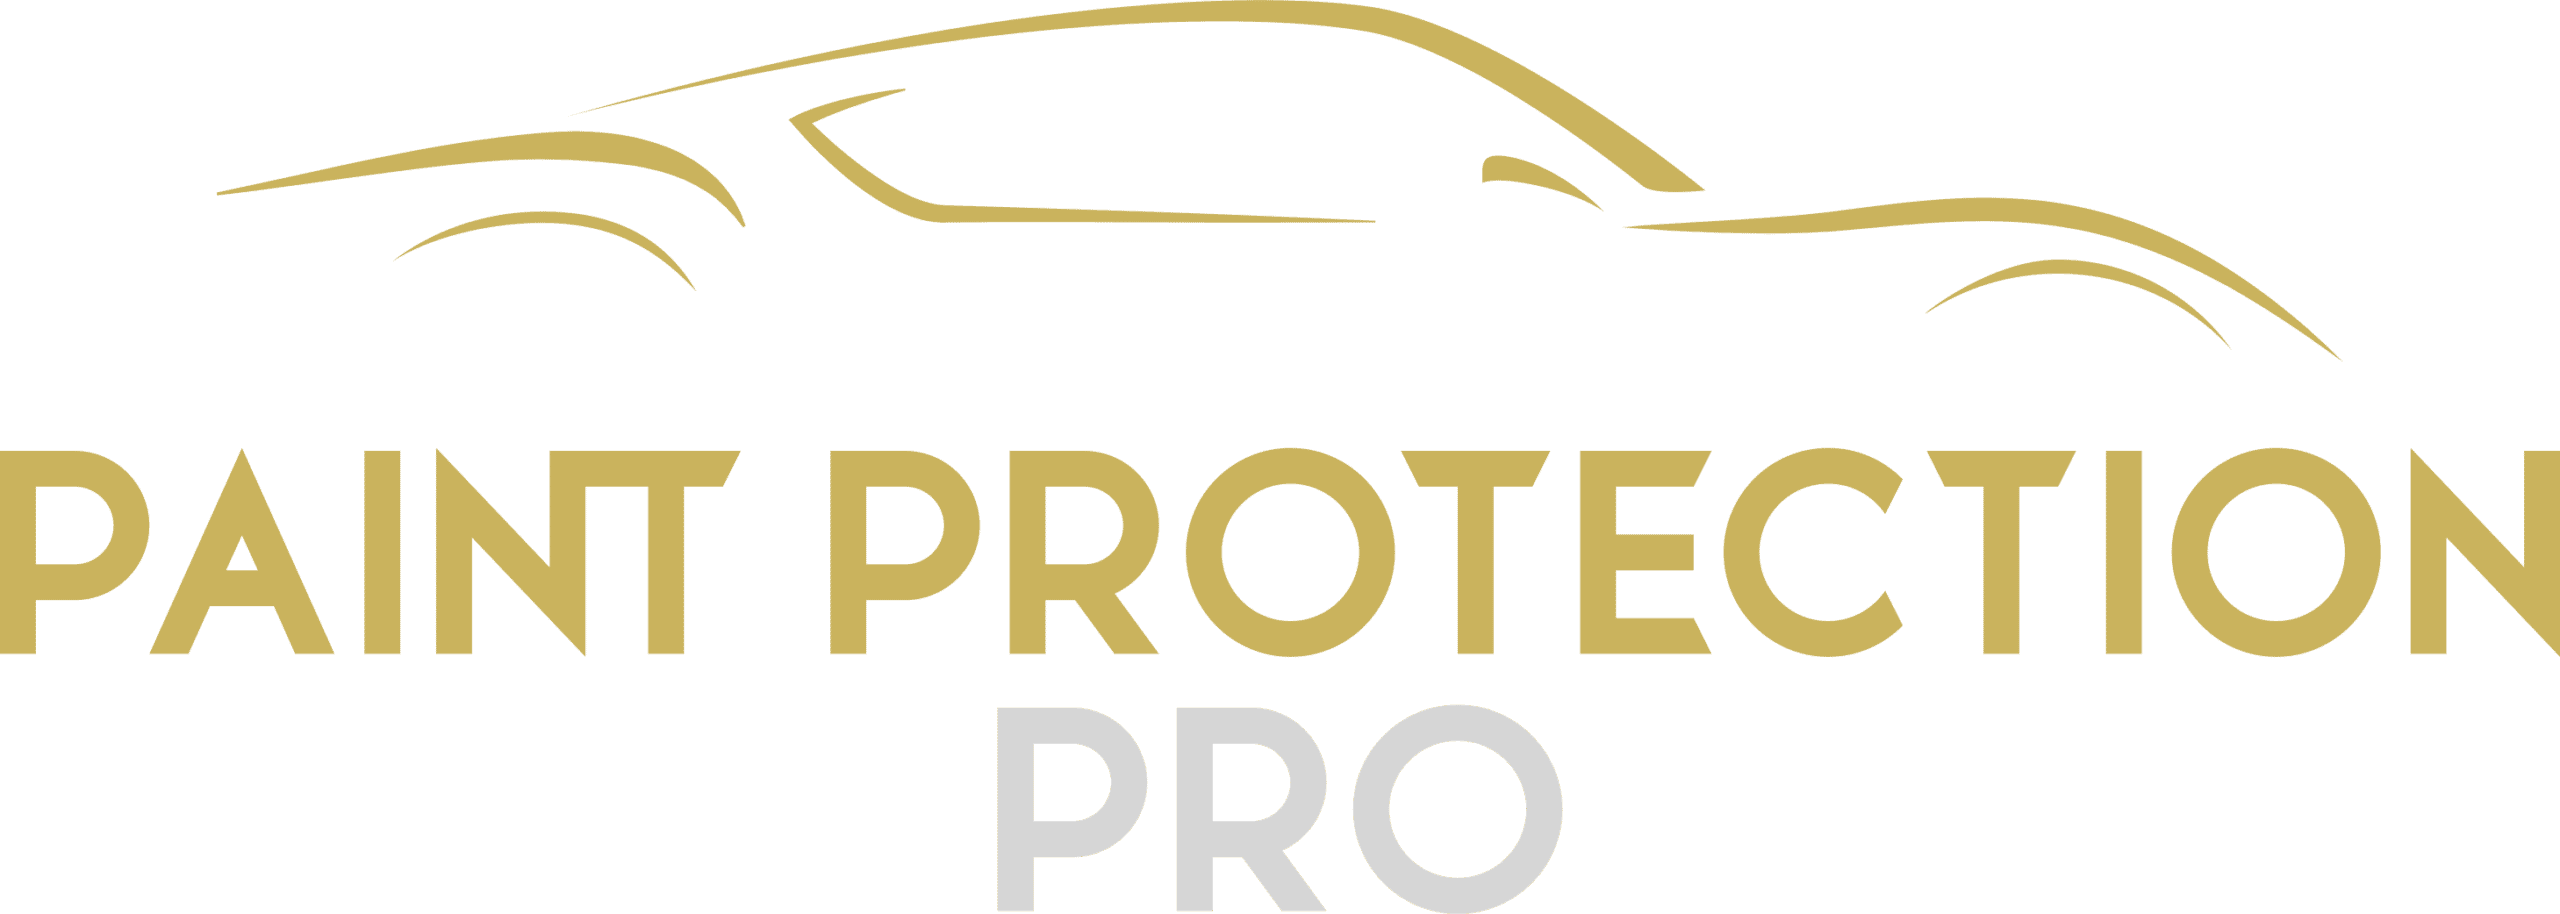 Paint Protection Pro logo